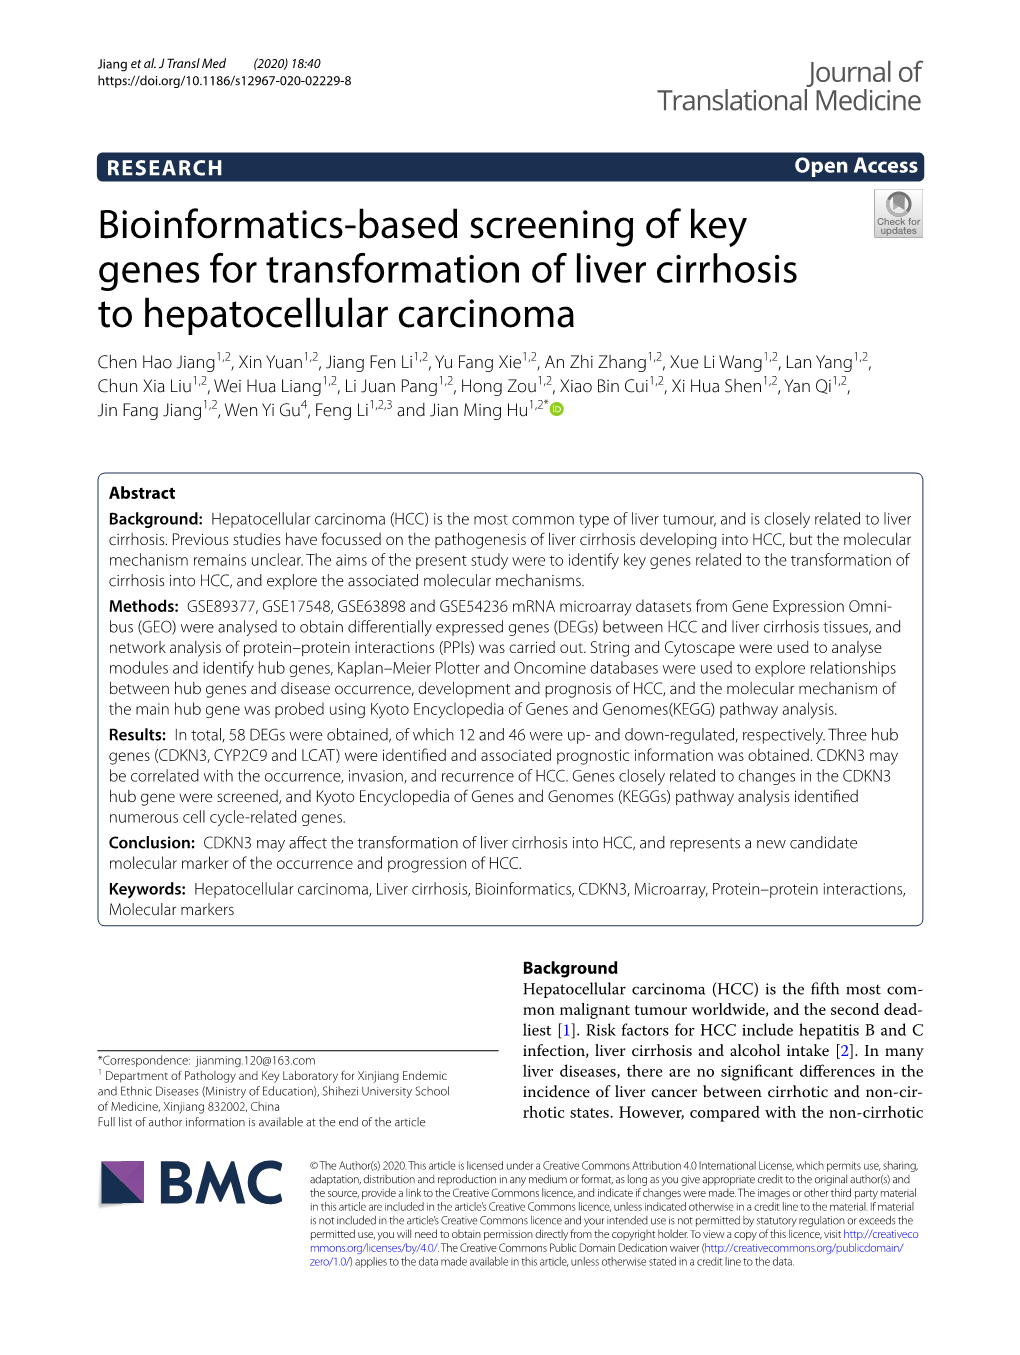 Bioinformatics-Based Screening of Key Genes for Transformation of Liver